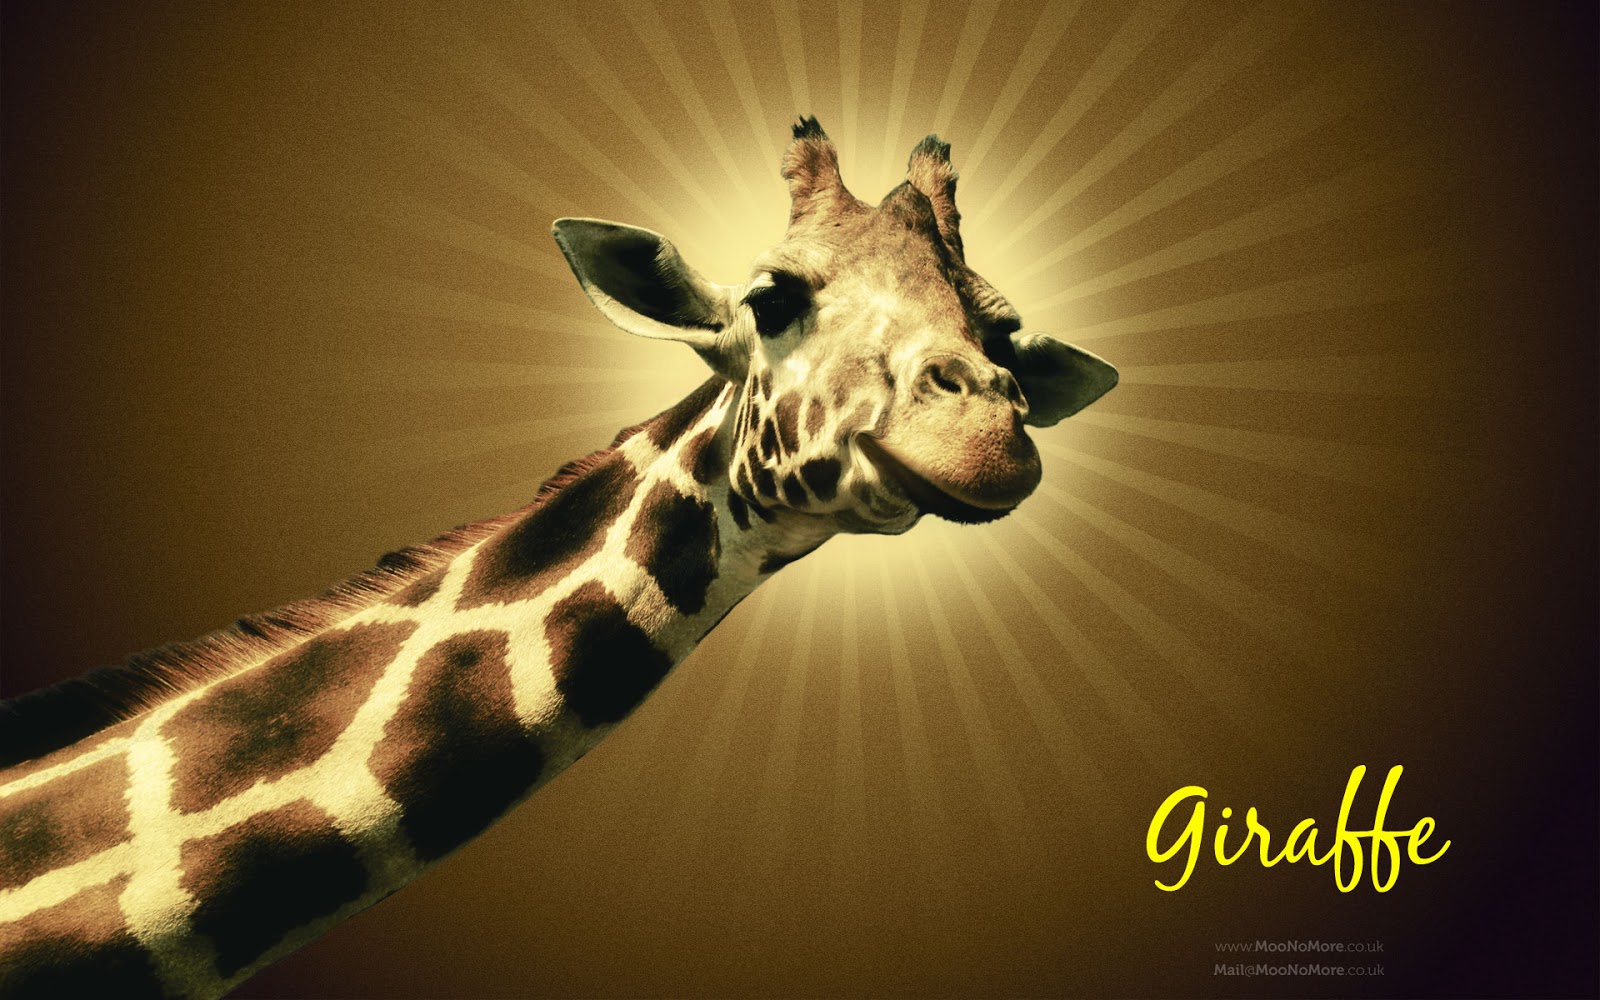 Giraffe HD wallpaper. Movies Songs Lyrics